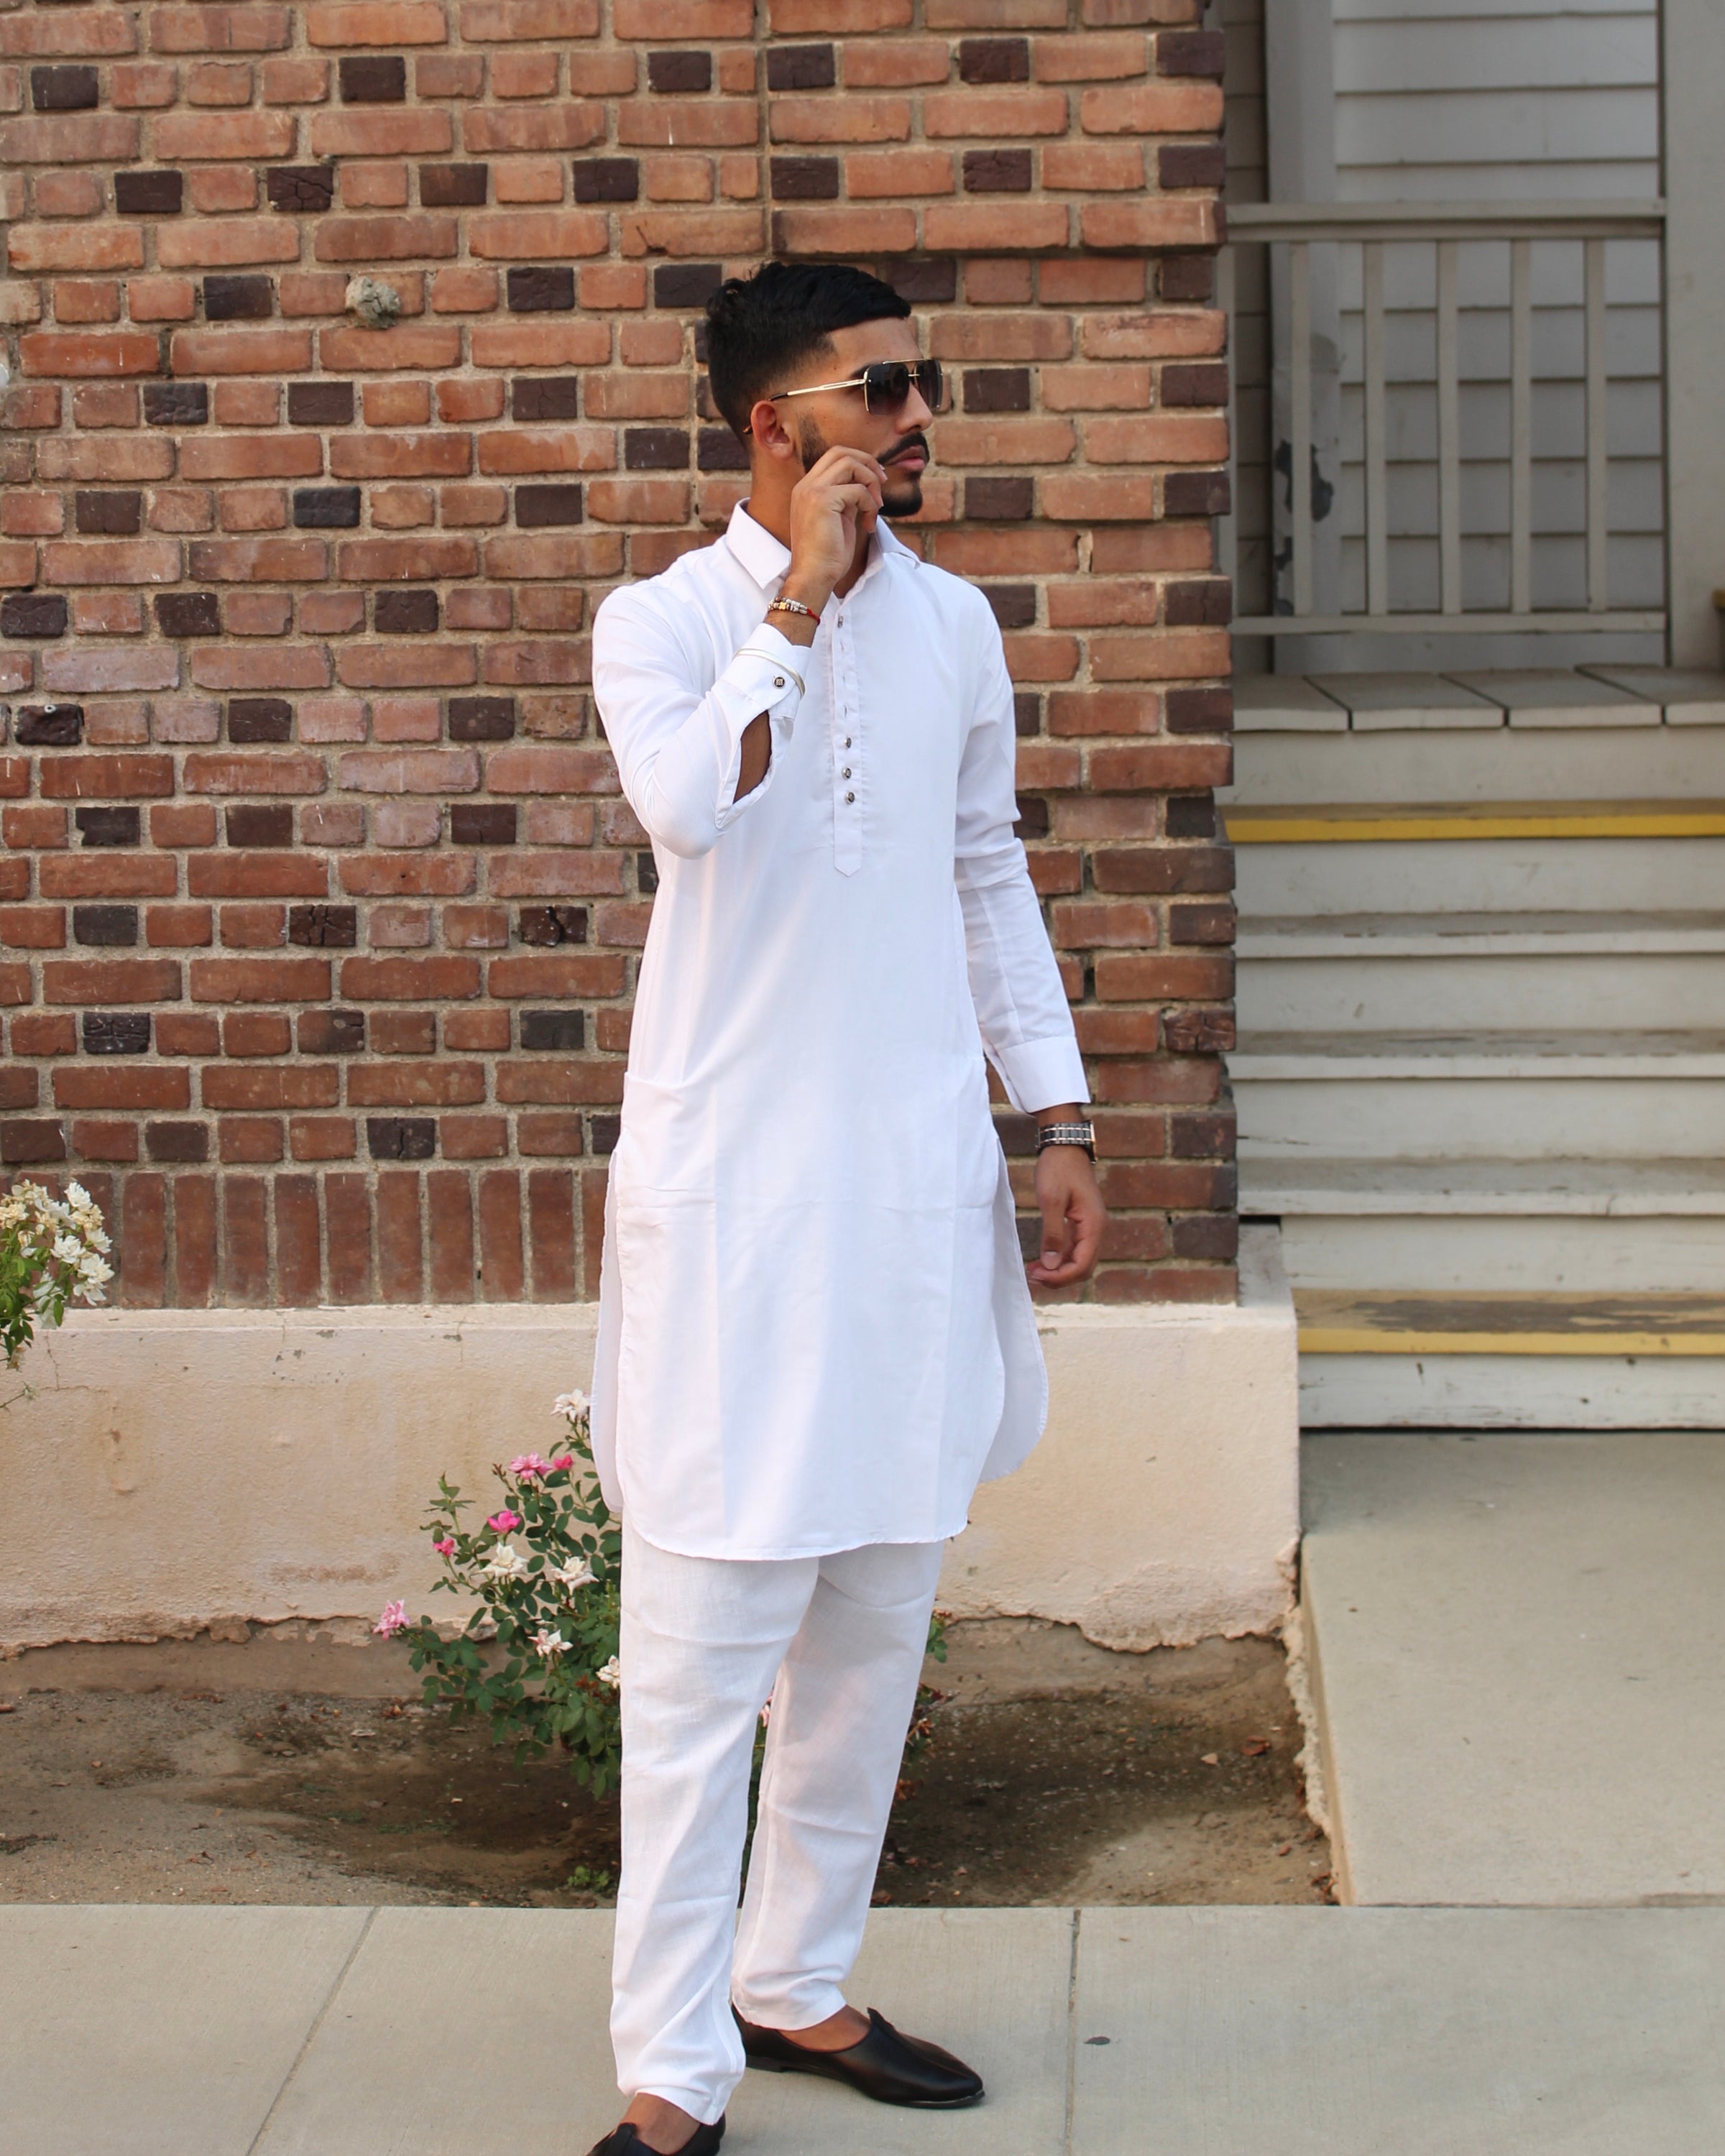 Designer White Colour Pajama at Rs 115/piece(s)